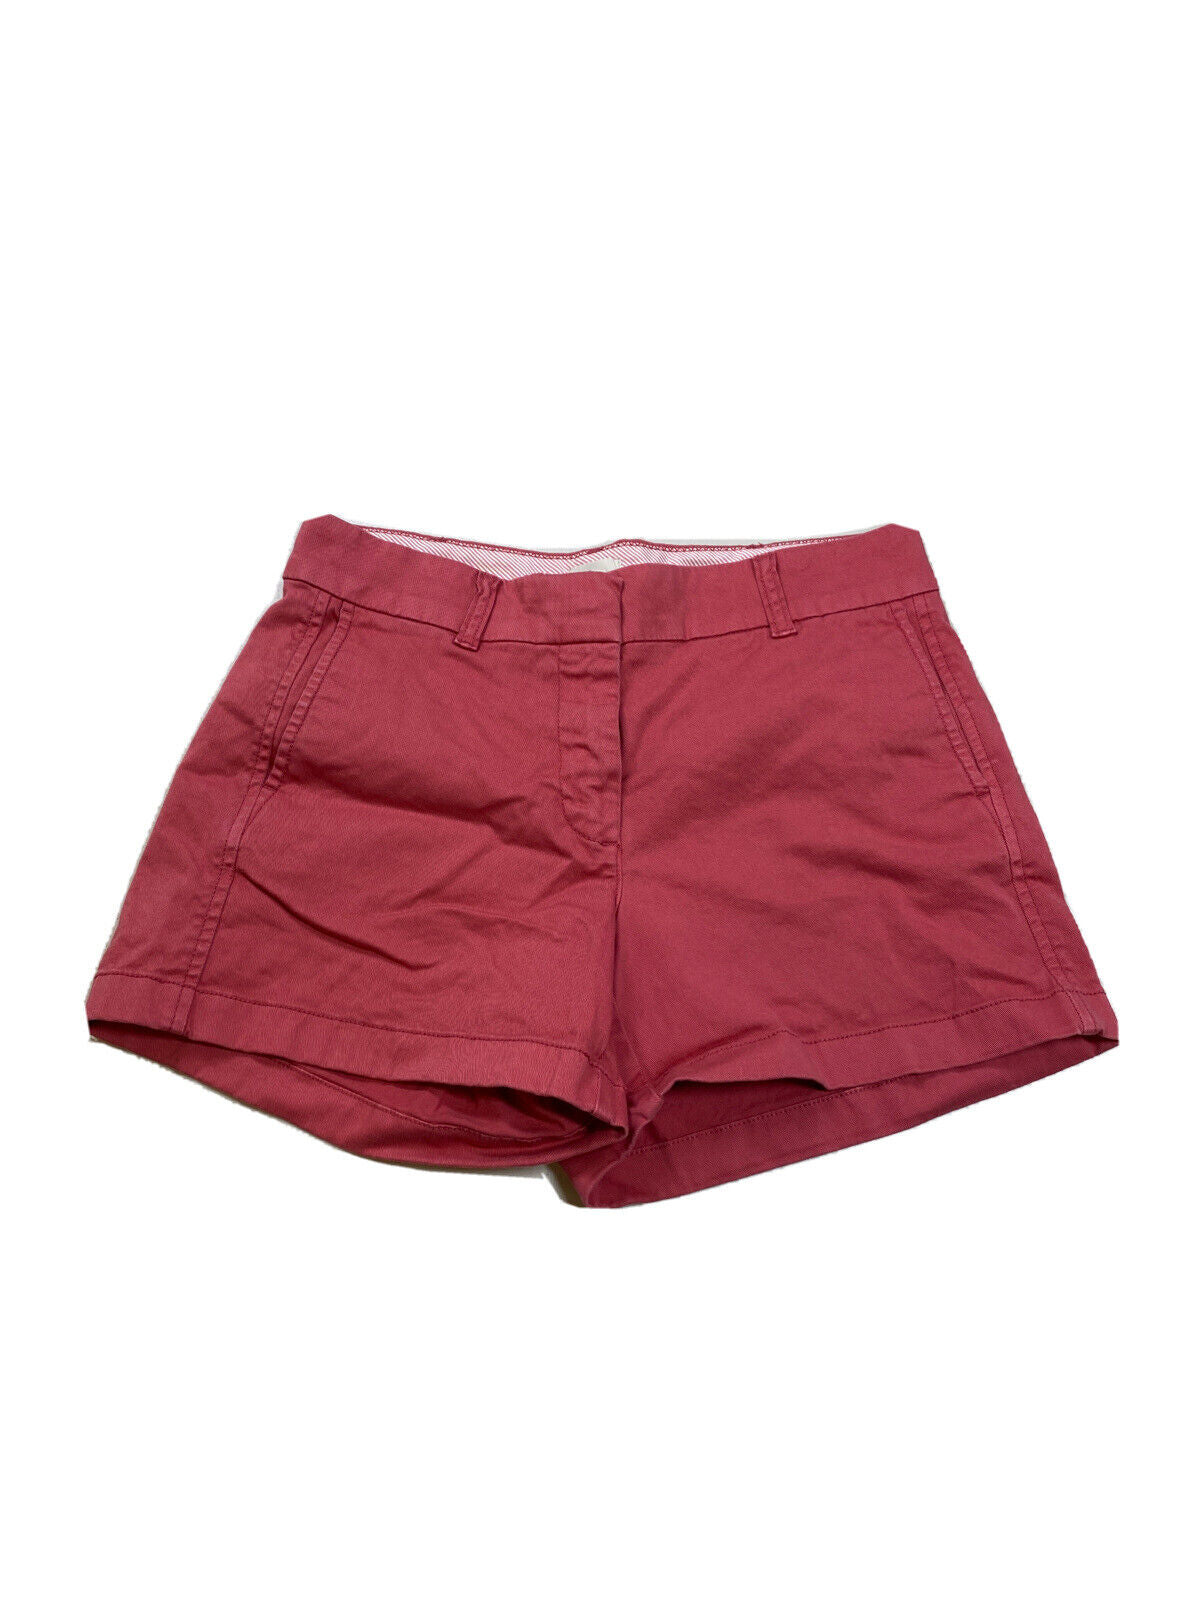 J.Crew Women's Pink/Salmon Cotton Chino Shorts - 4